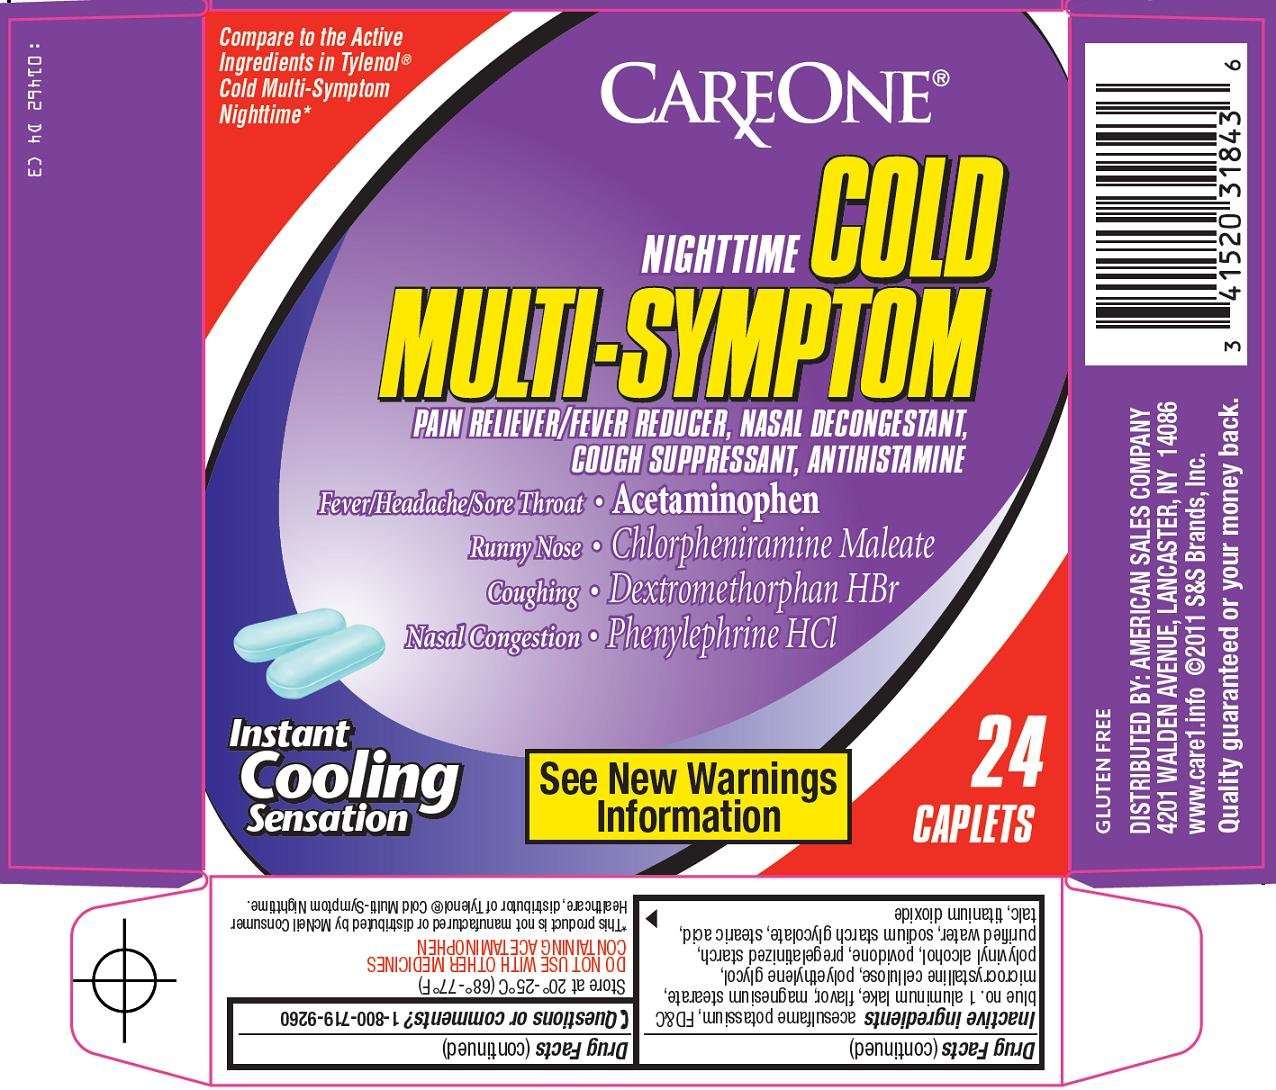 Care One Cold Multi Symptom